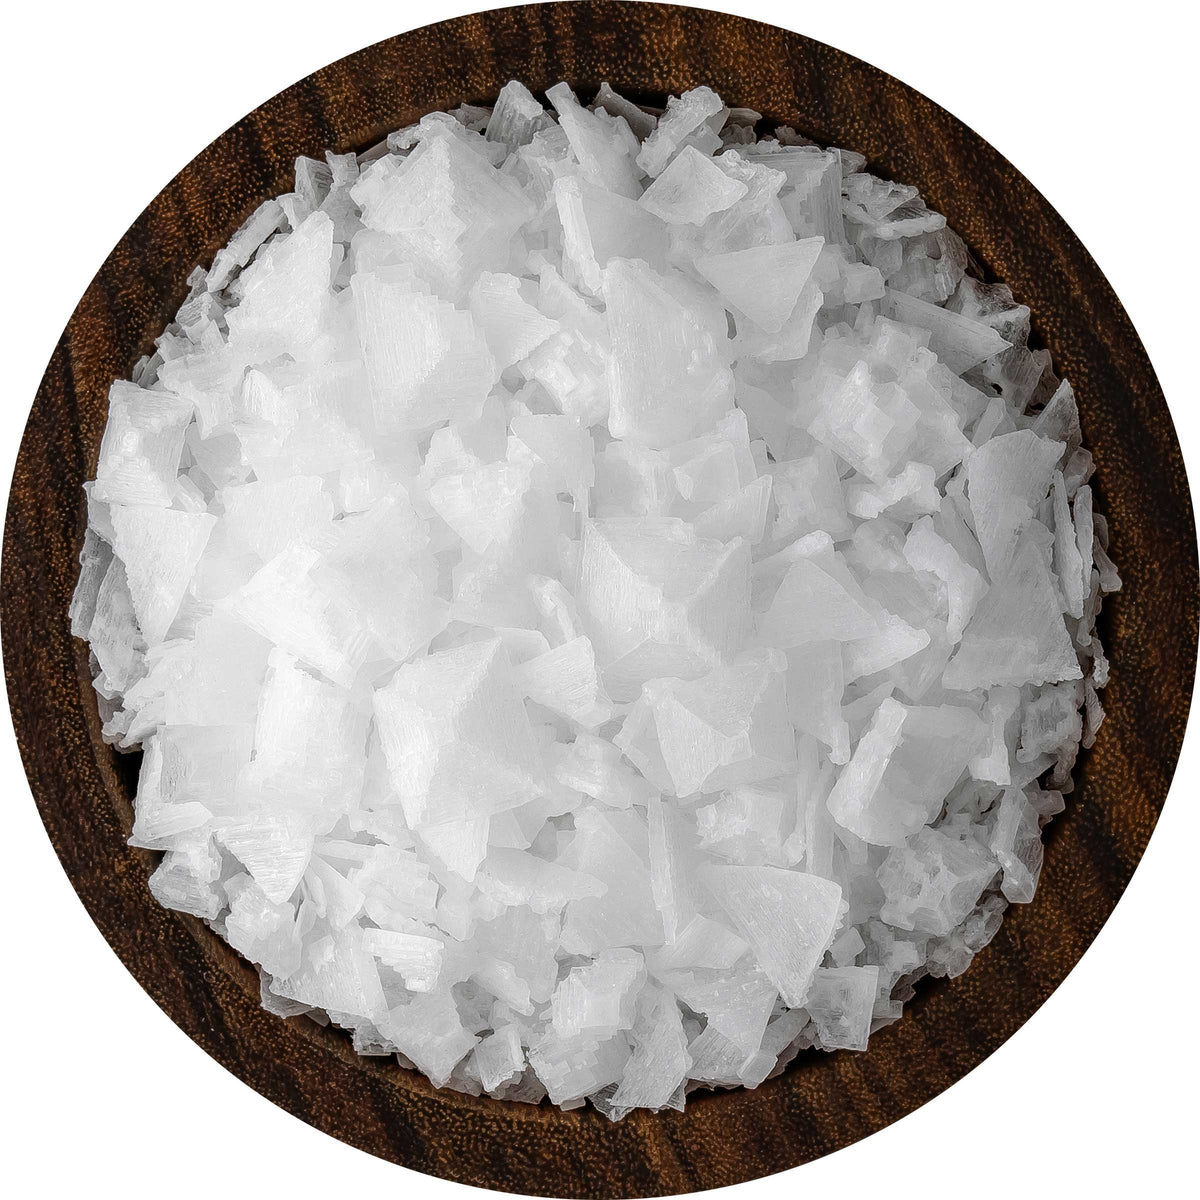 Sea Salt FLAKES, Maldon 1lb, Sal Marina 100% Natural Granules